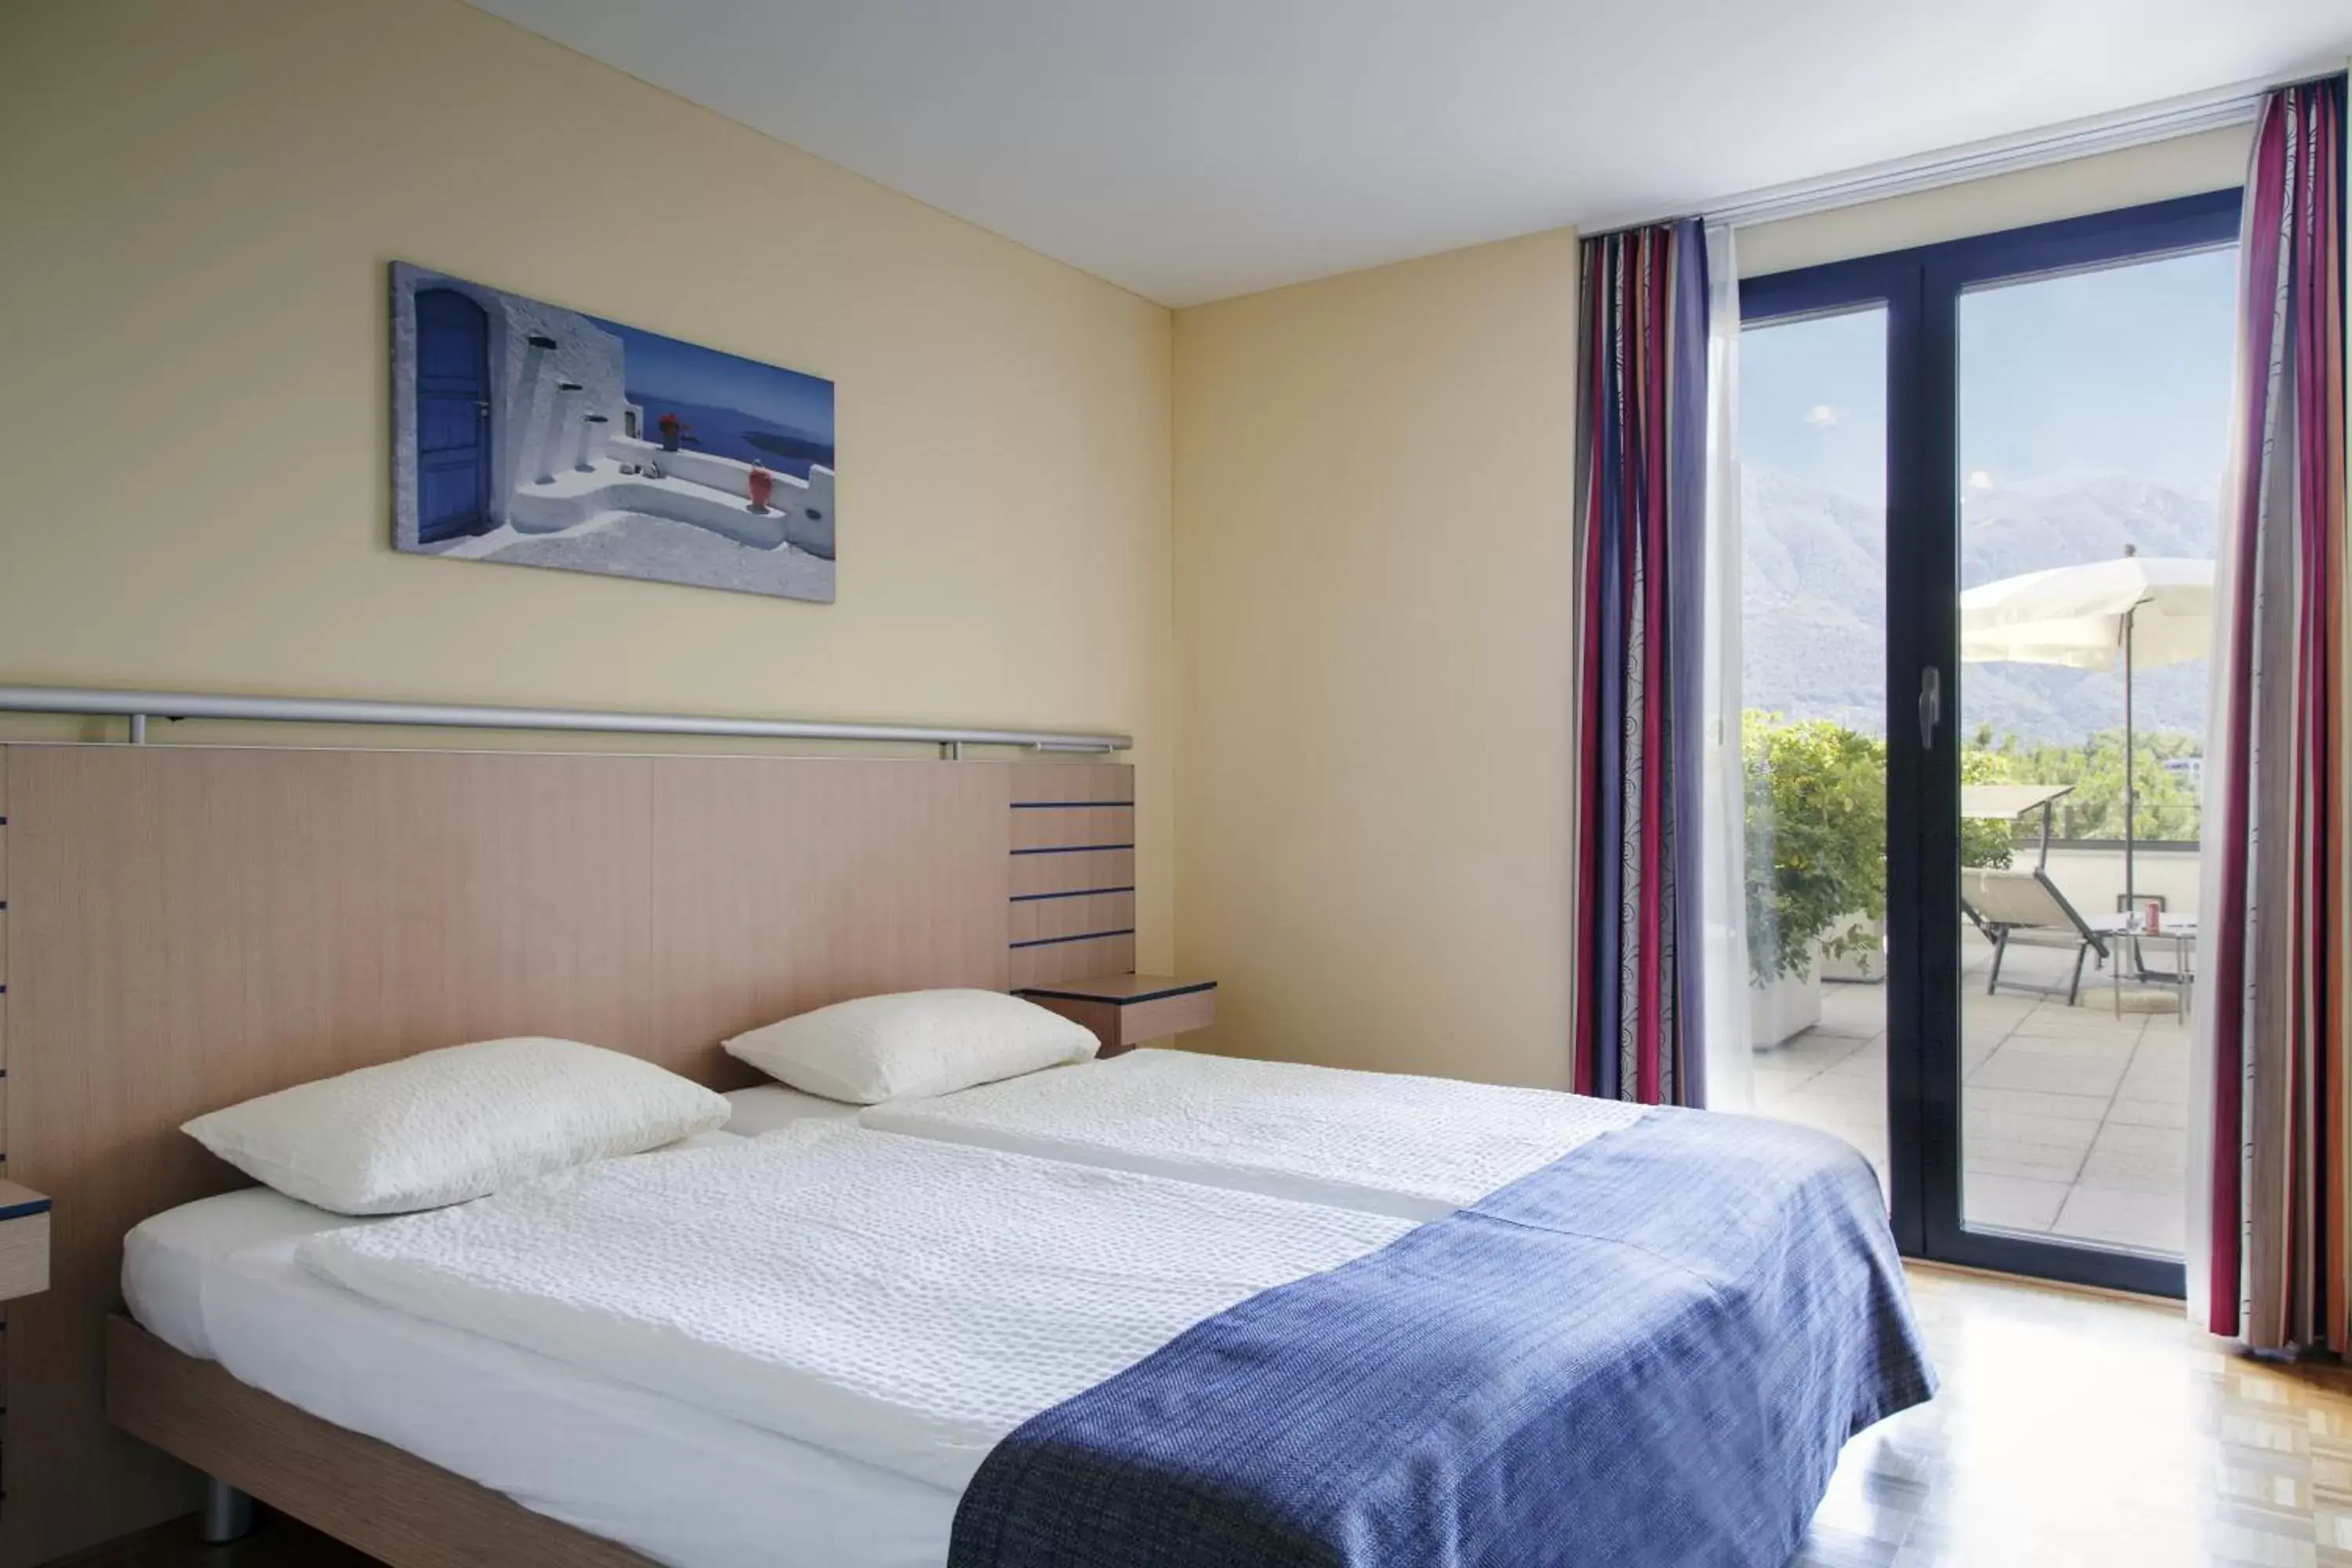 Bed, Room Photo in Hotel Geranio Au Lac